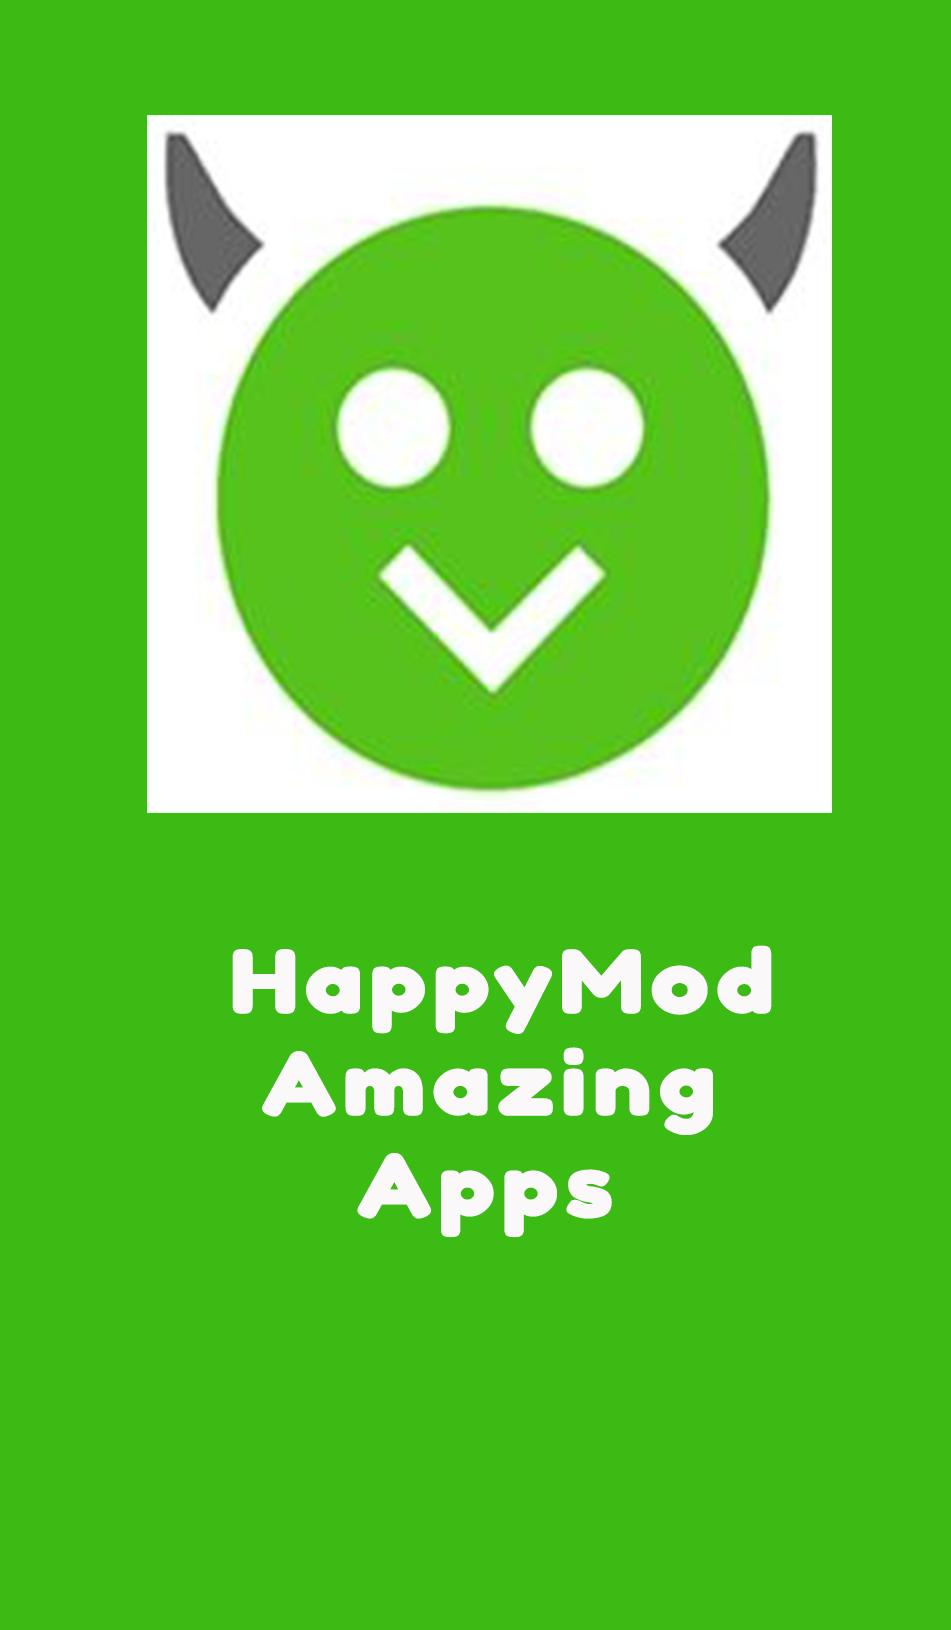 HappyMod: New Happy Apps - Tips For Happymod 2021 1.0 Screenshot 3